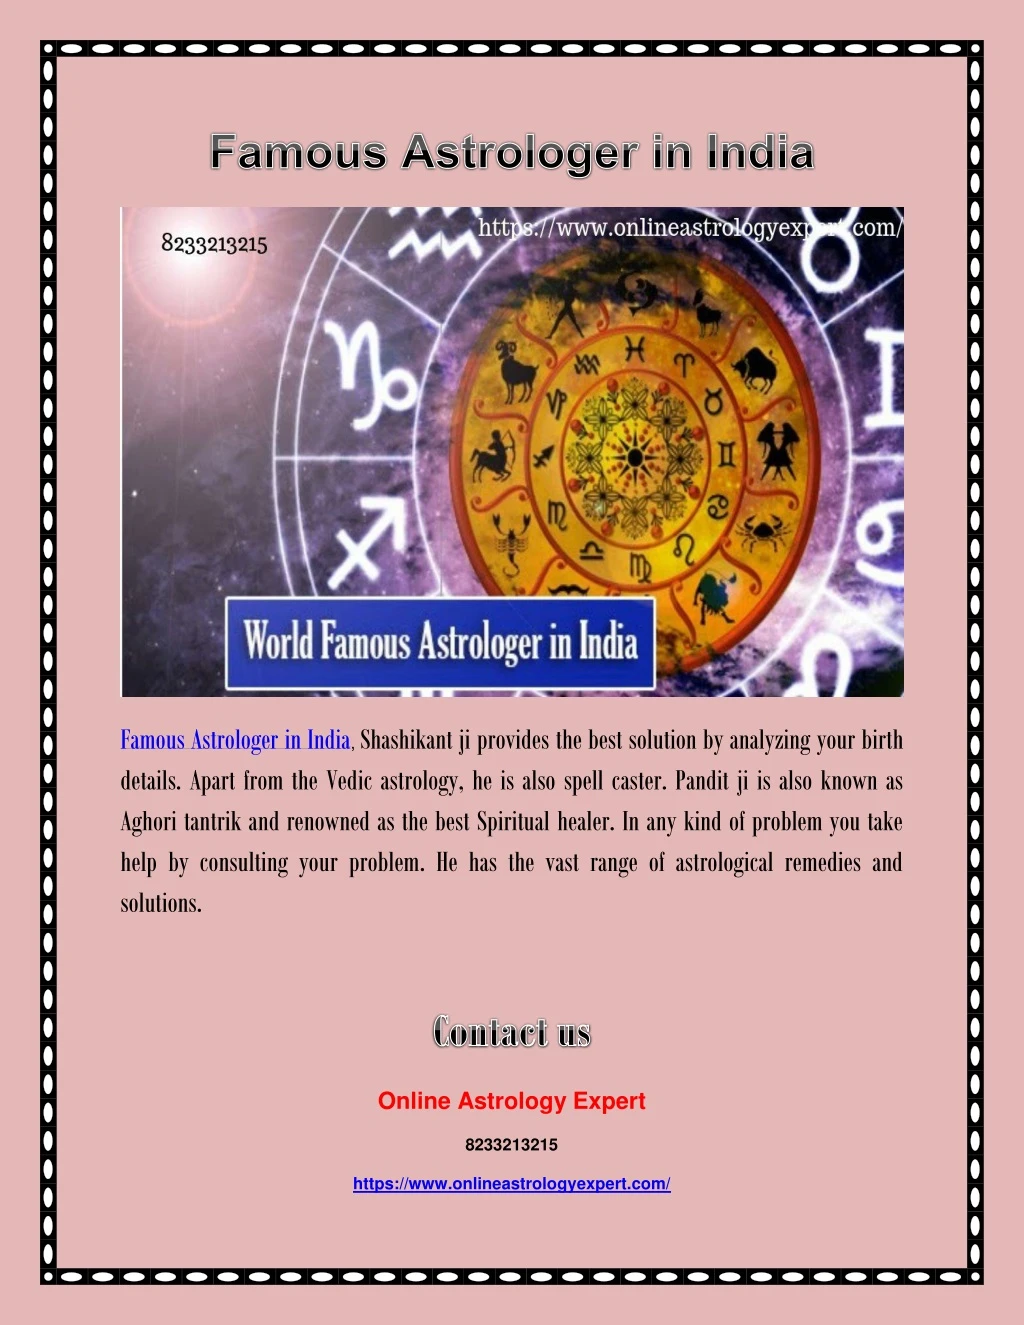 famous astrologer in india shashikant ji provides